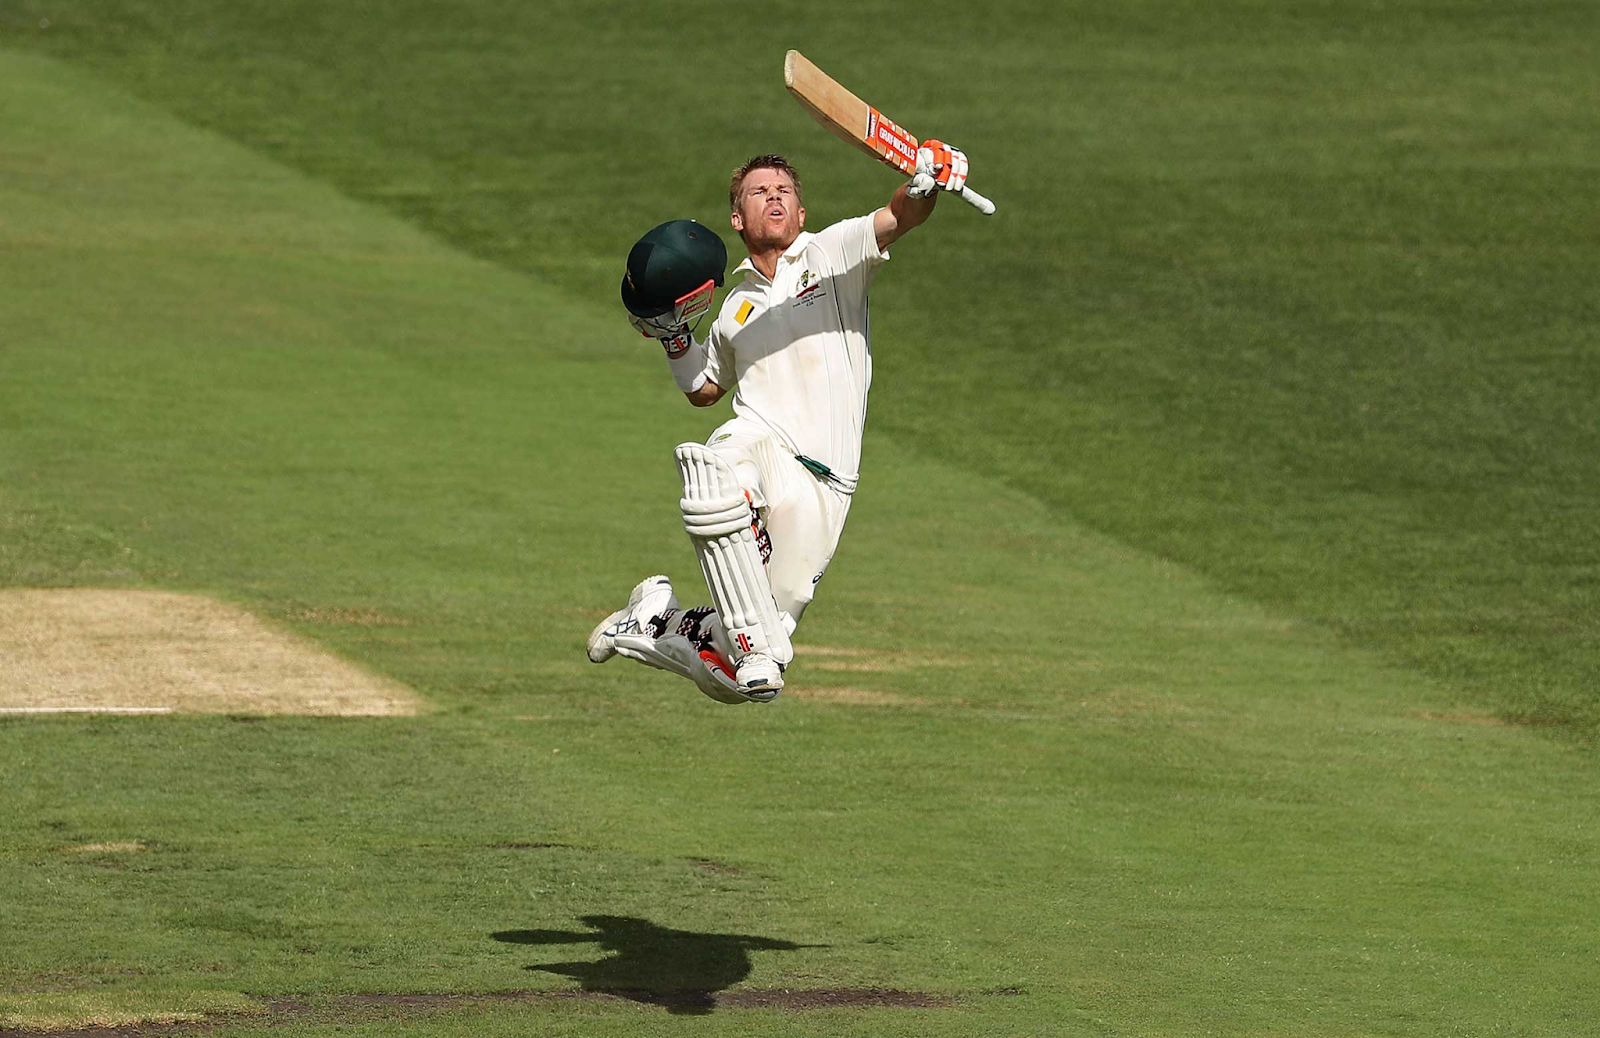 David Warner scored 180 runs against India on a tough pitch in Perth